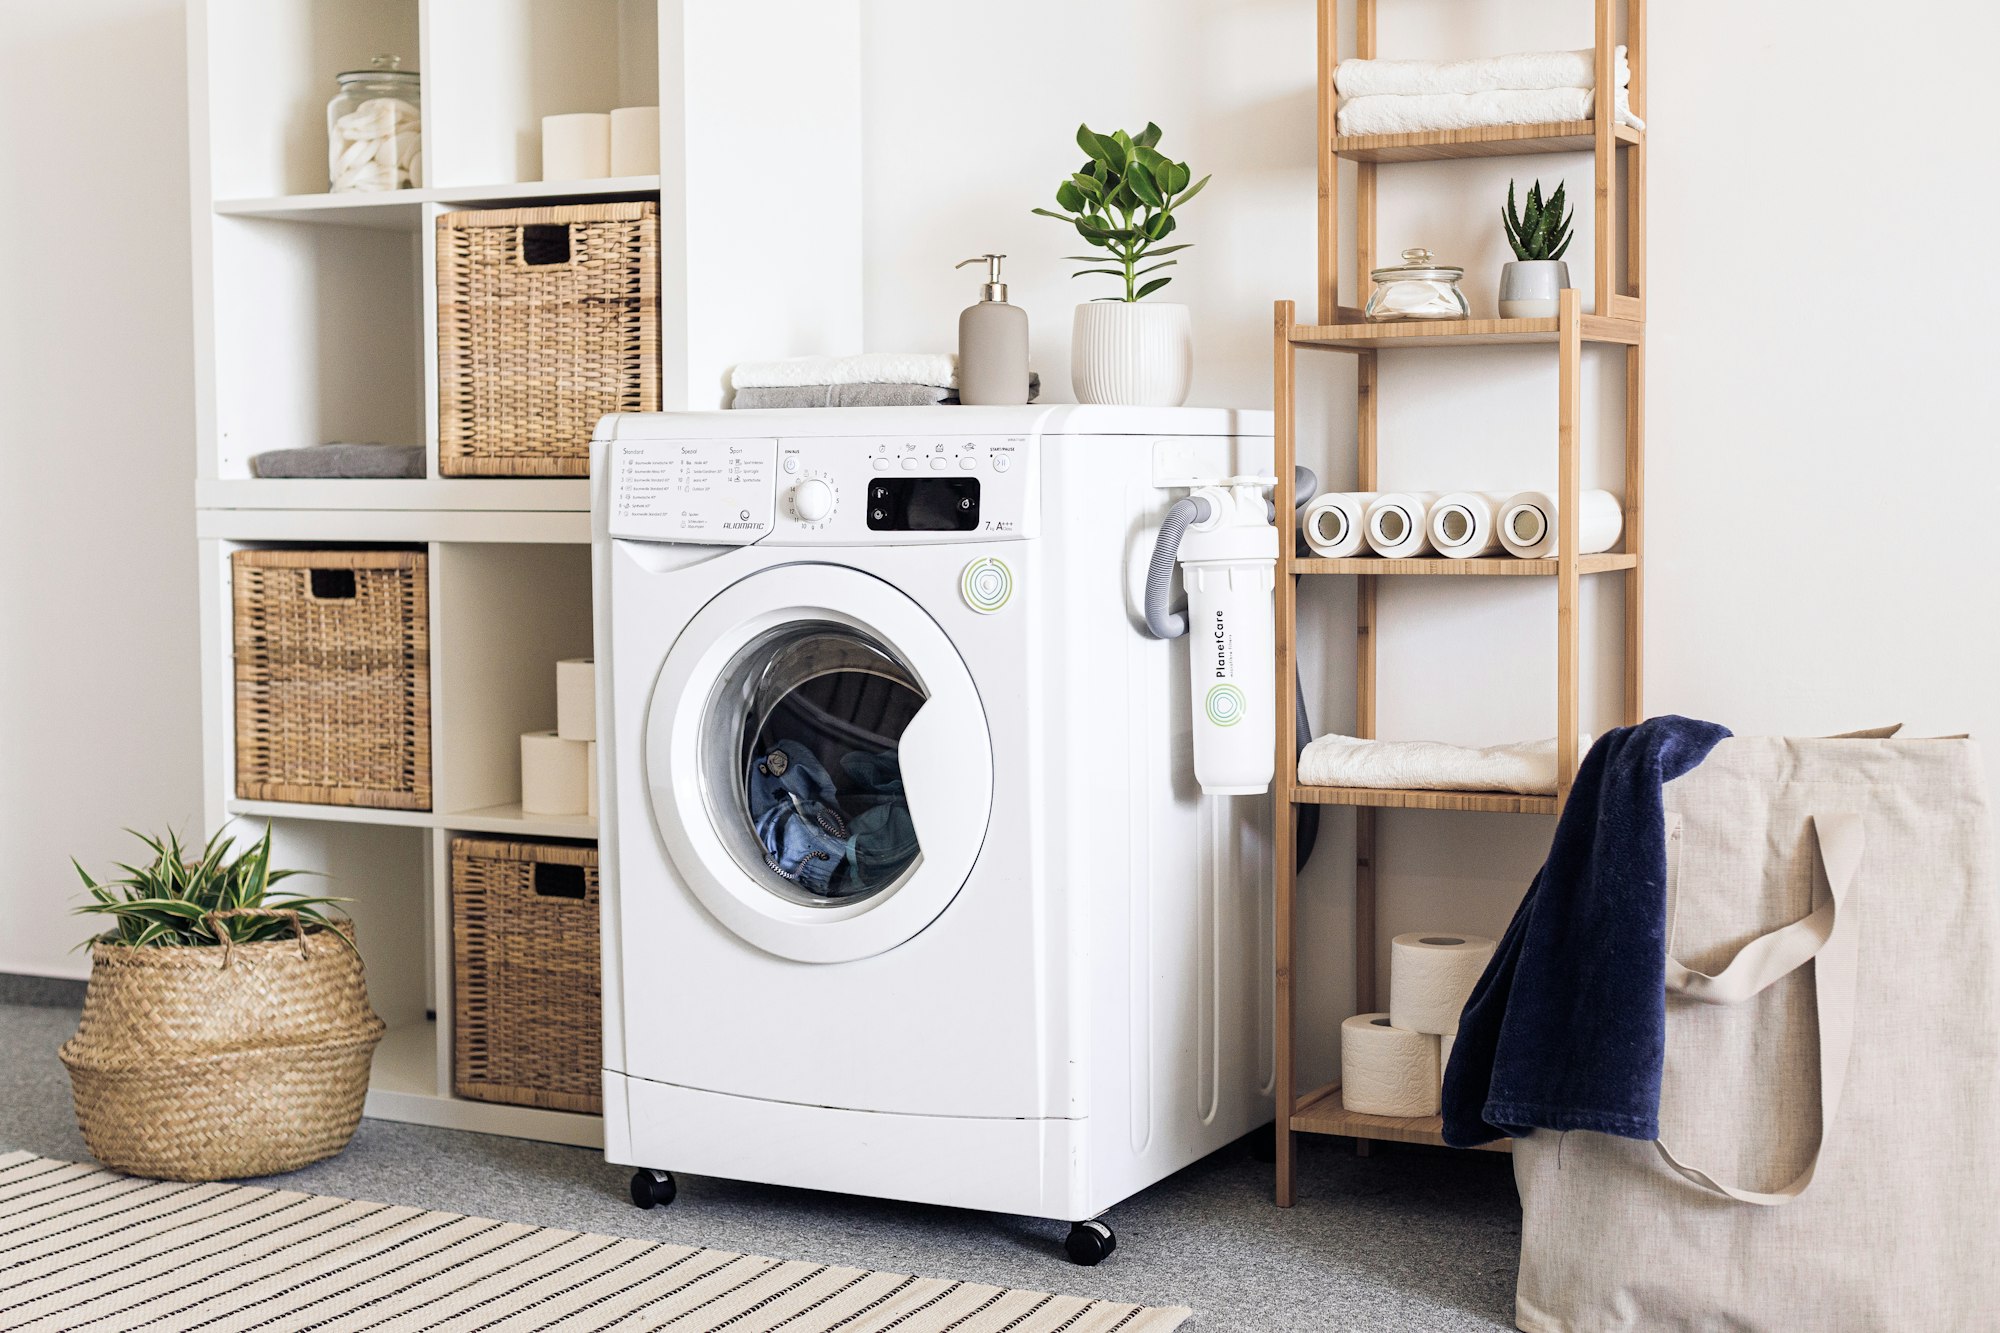 A white washing machine beside a laundry basket